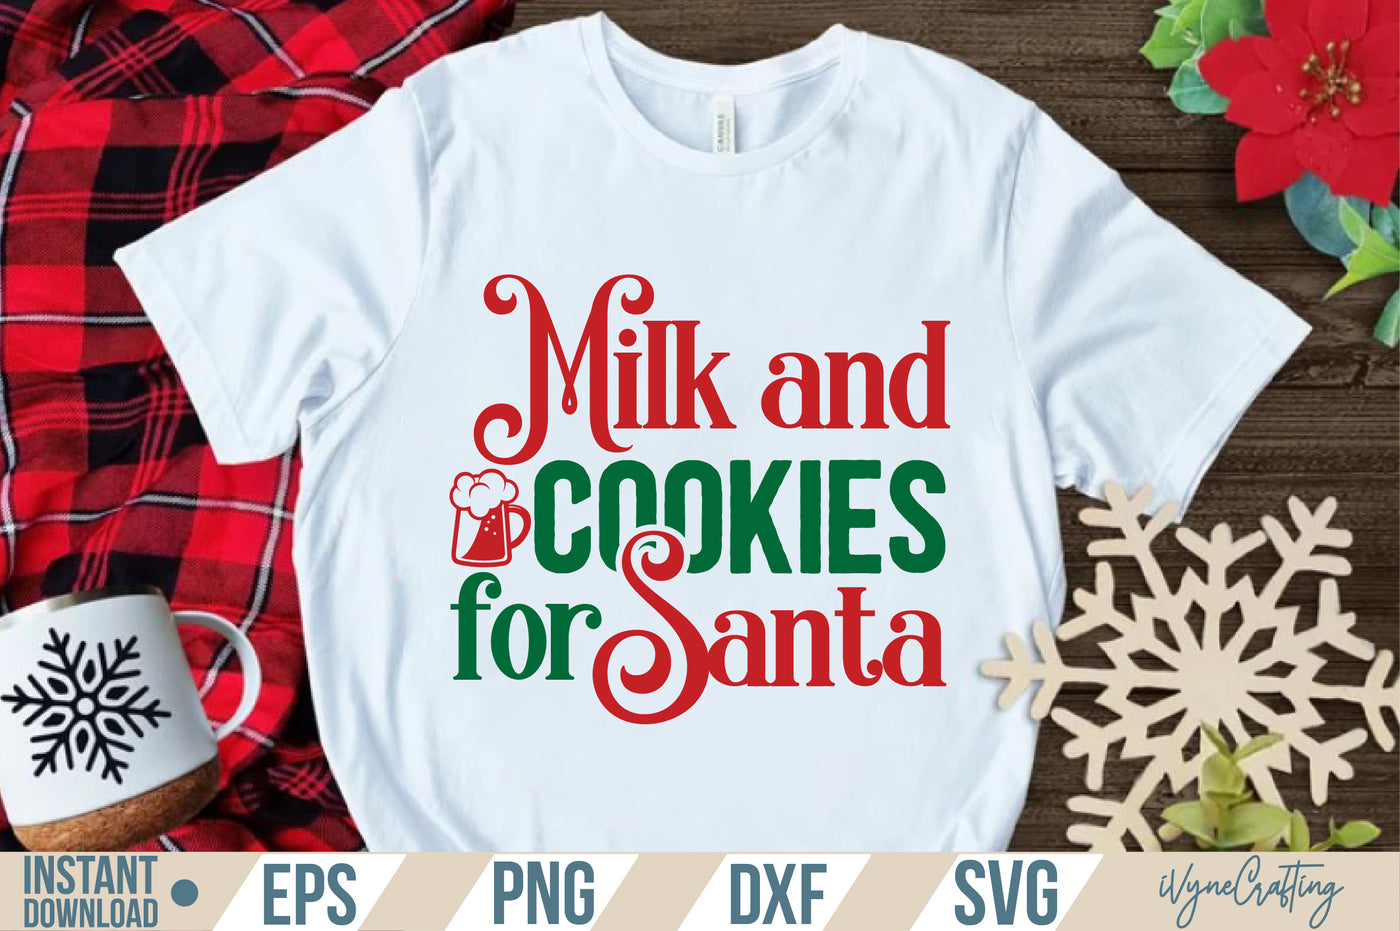 Milk and cookies for Santa SVG Cut File